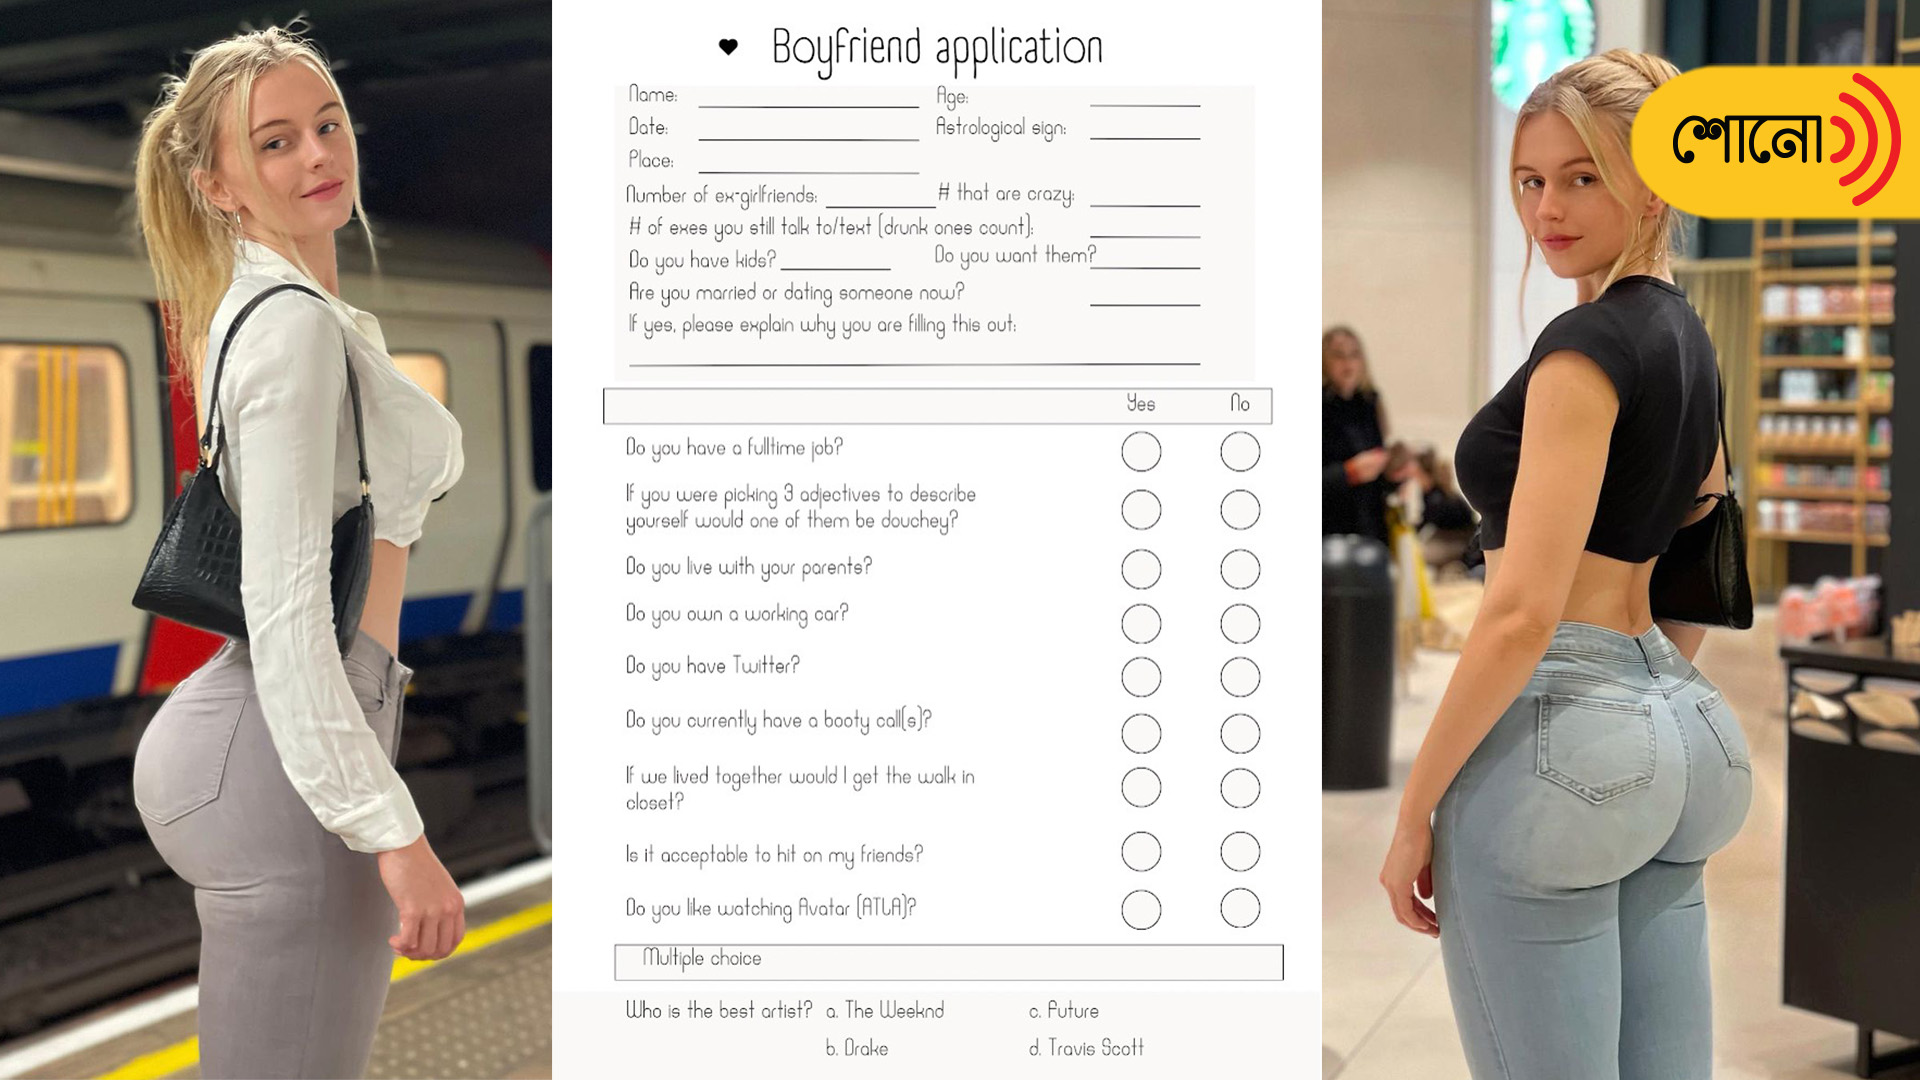 model’s “boyfriend application” attracts 3,000 hopeful candidates